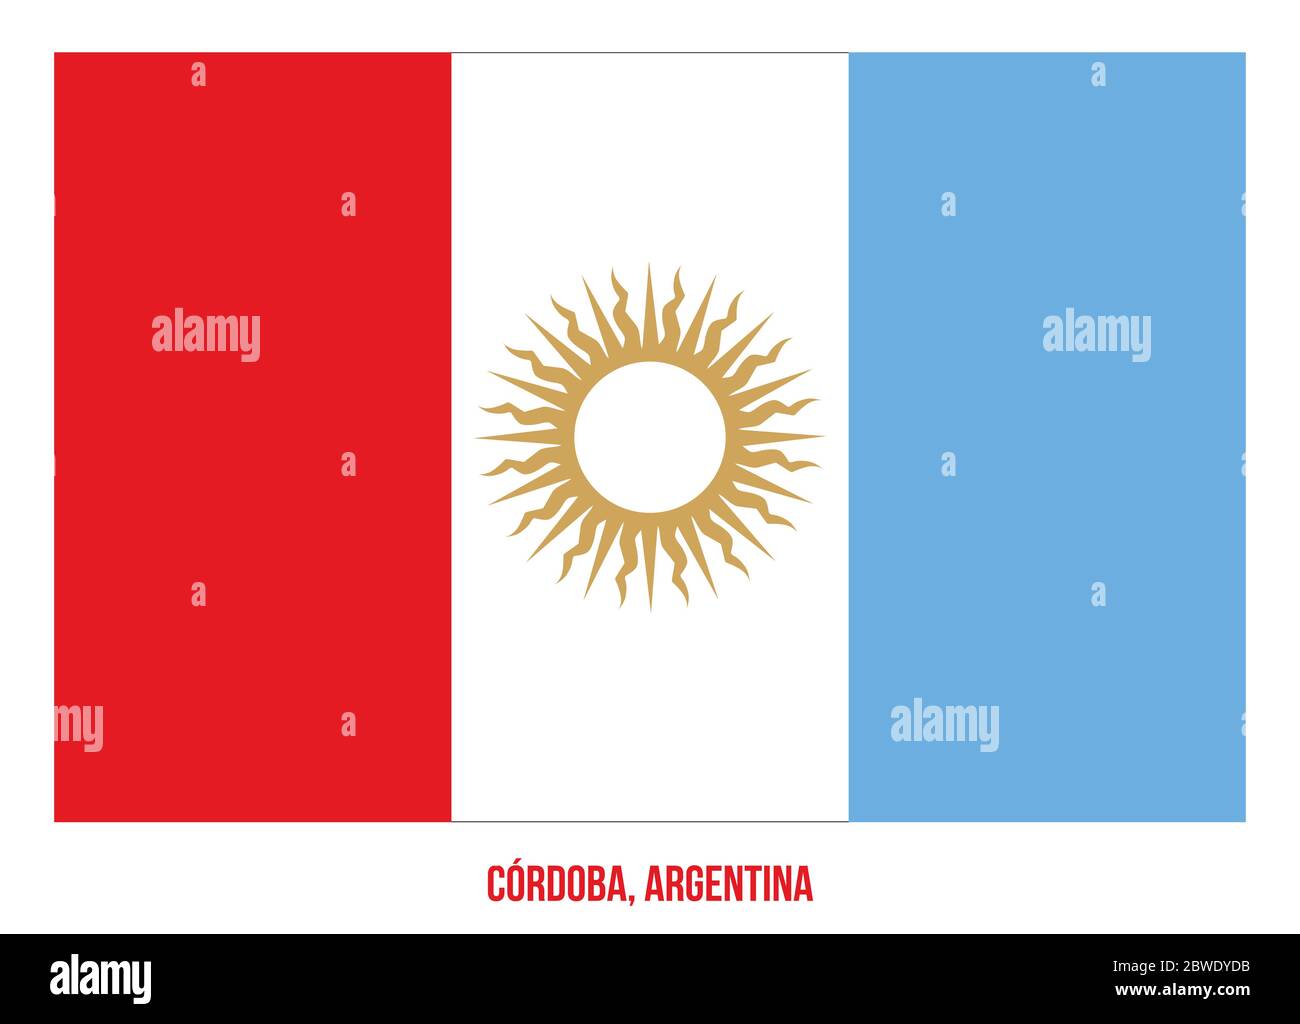 Cordoba Flag Vector Illustration on White Background. Flag of Argentina Provinces. Stock Vector